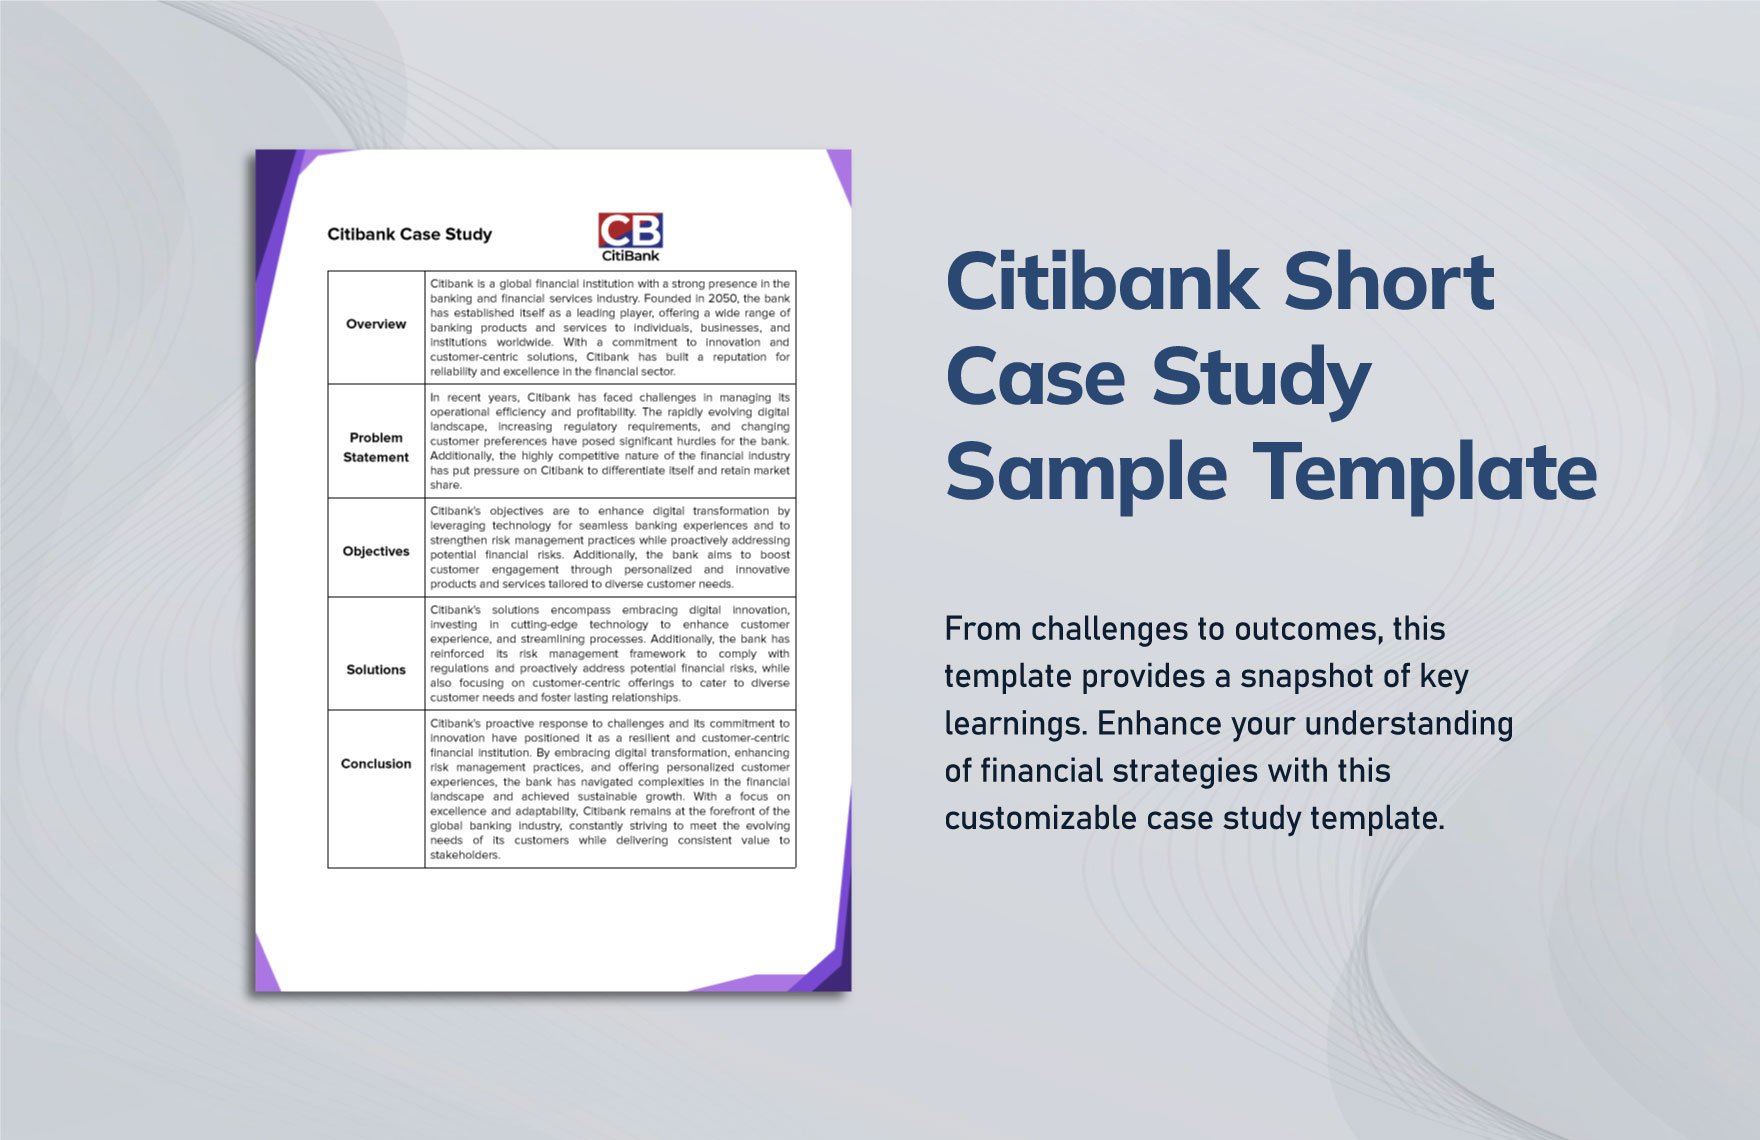 Citibank Short Case Study Sample Template